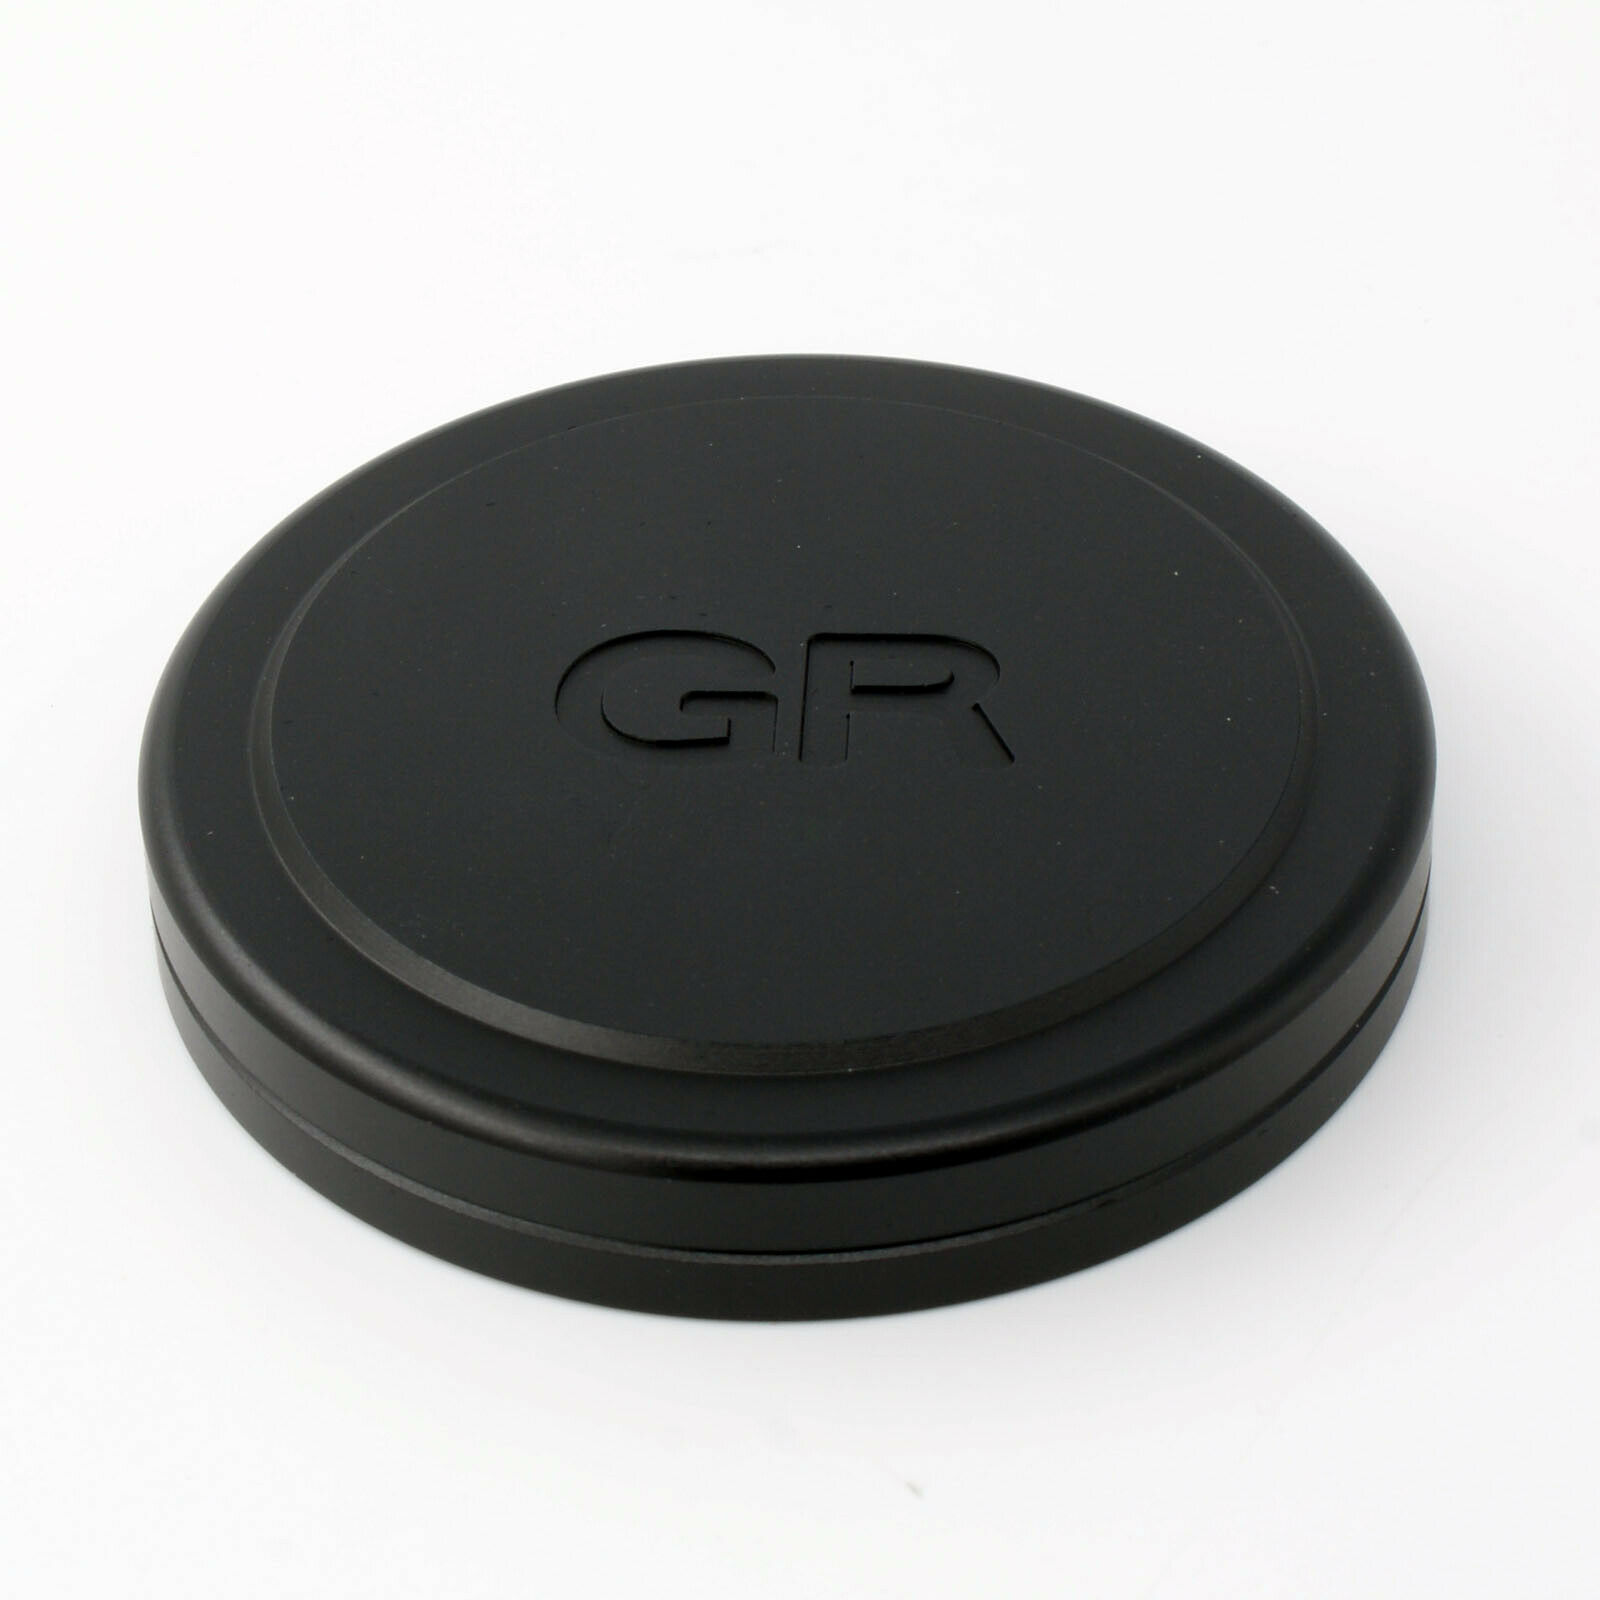 Camera Accessories Lens Cap Cover For Ricoh GR III / GR II / GR2 / GR3 Cameras Lens Protector